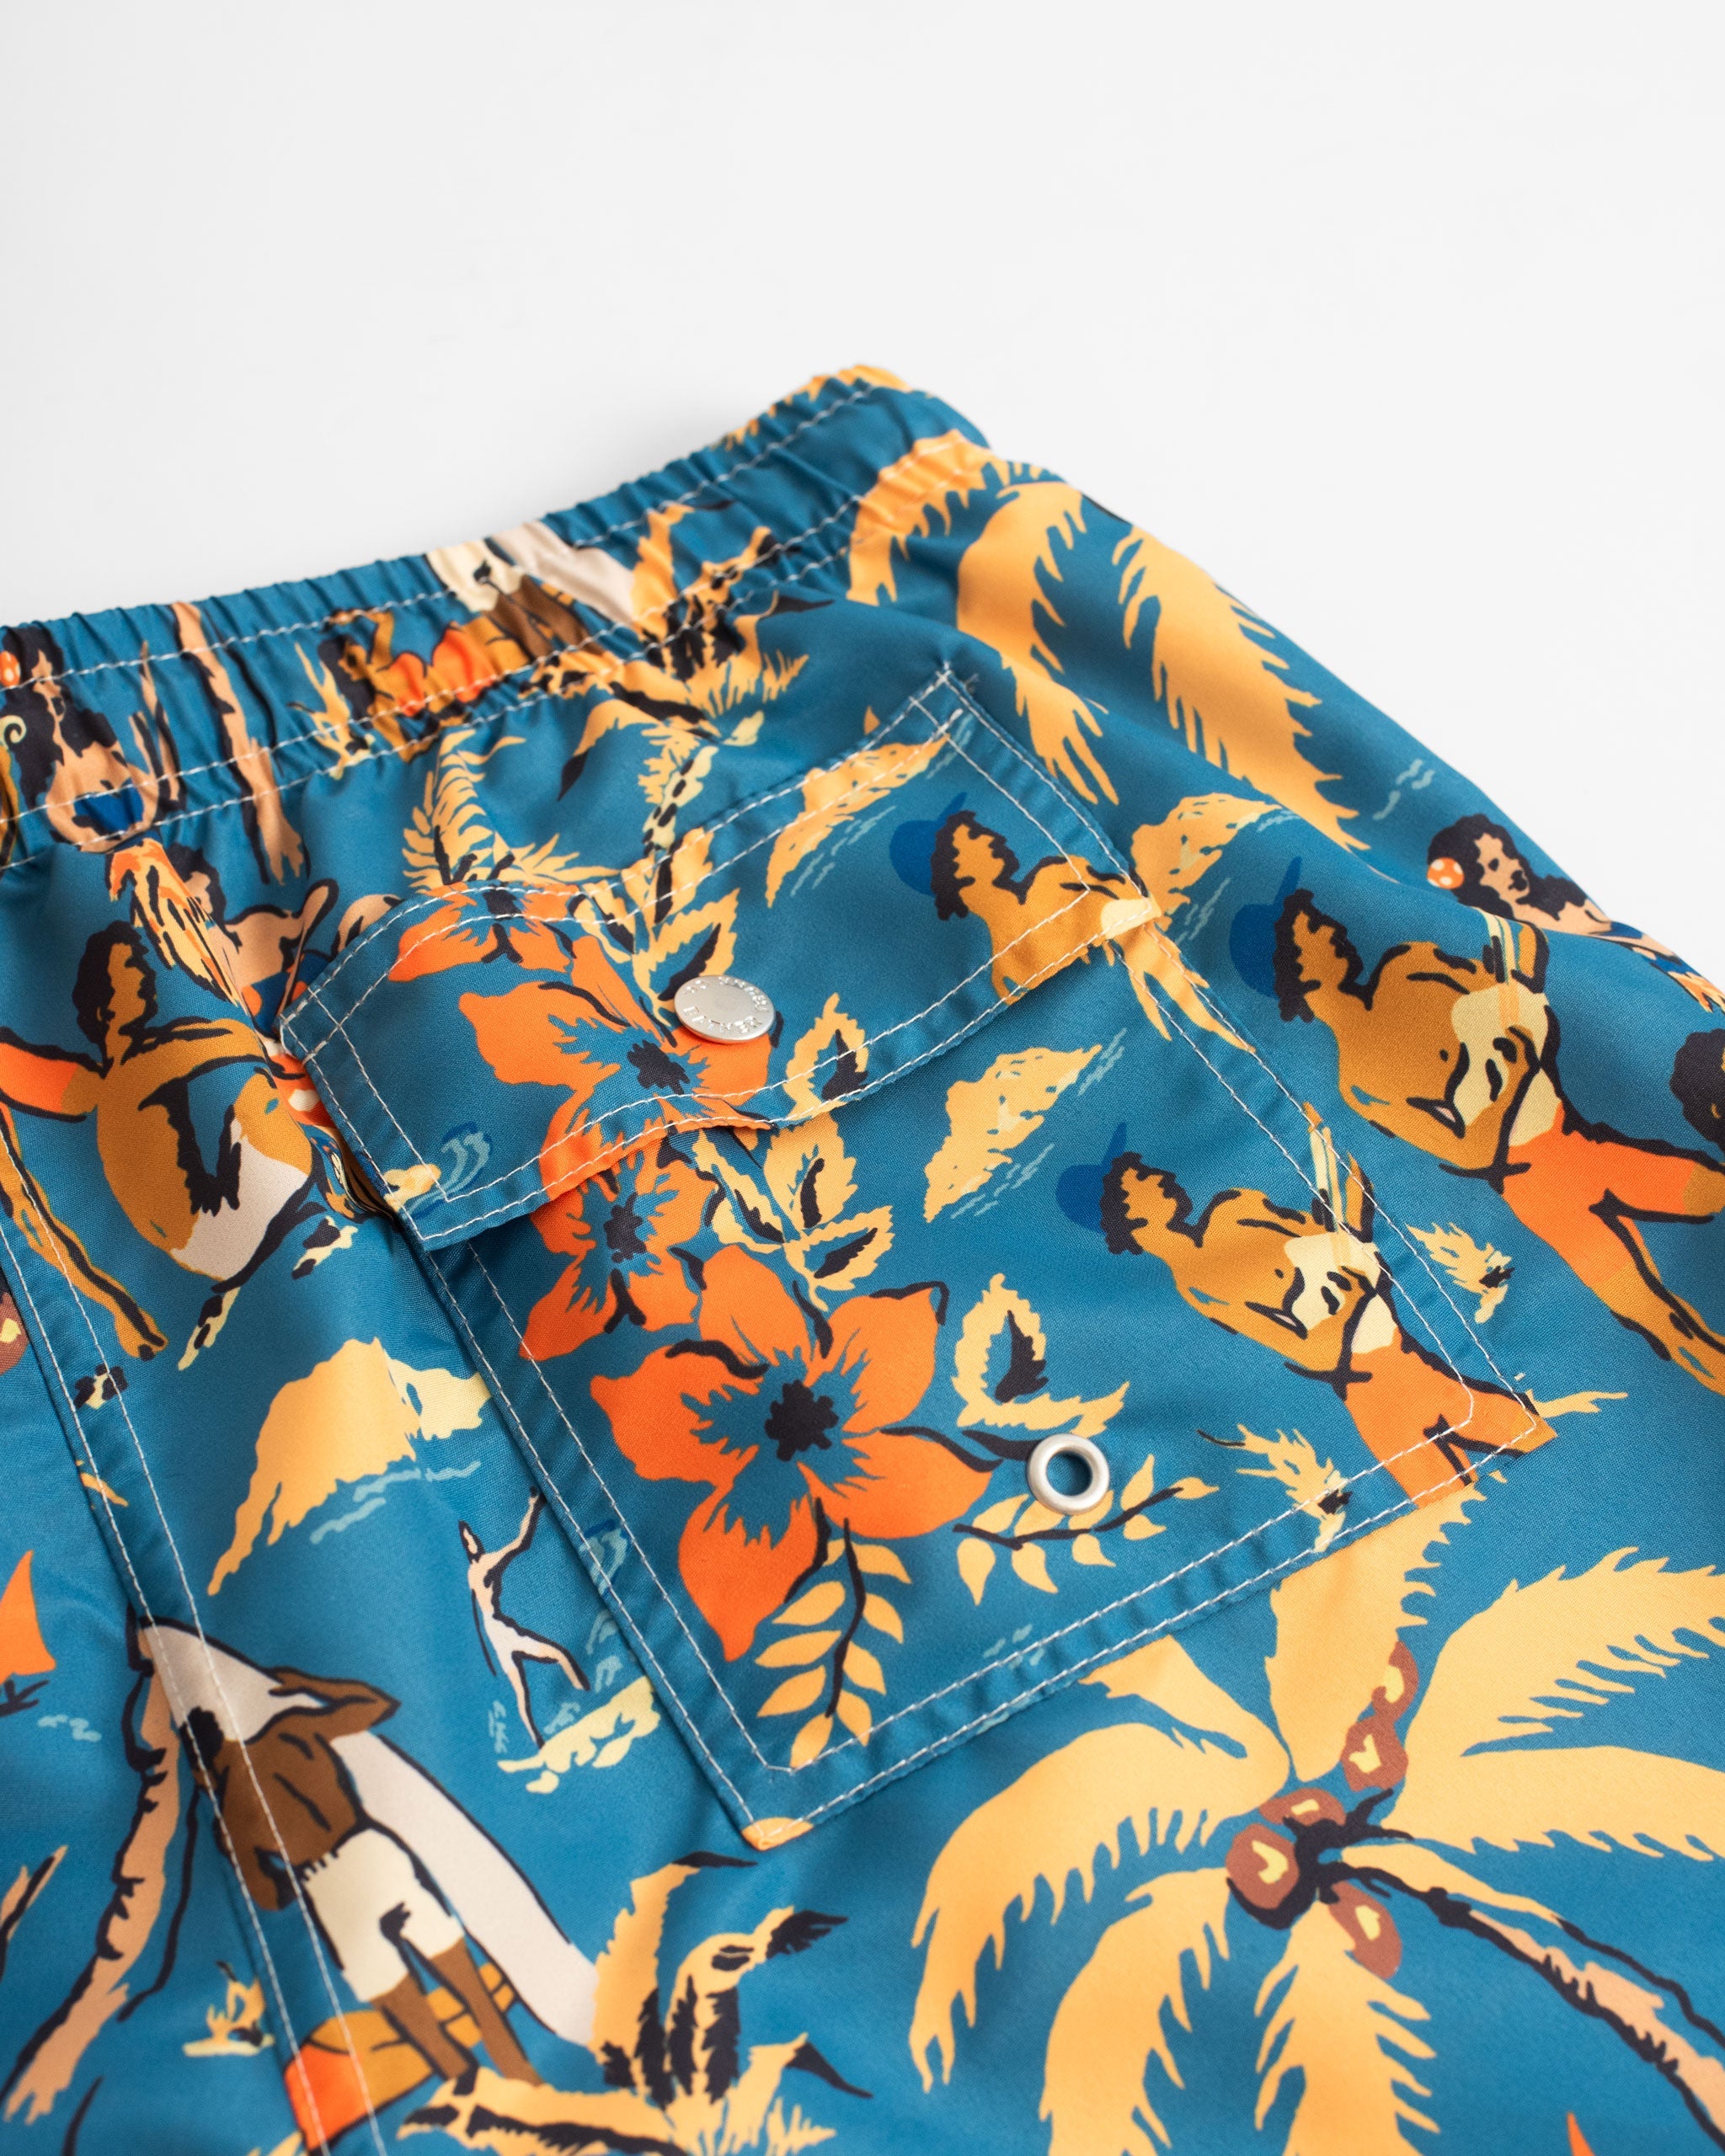 Back Pocket shot of Blue swim trunk with Hawaiian-inspired printed beach scene